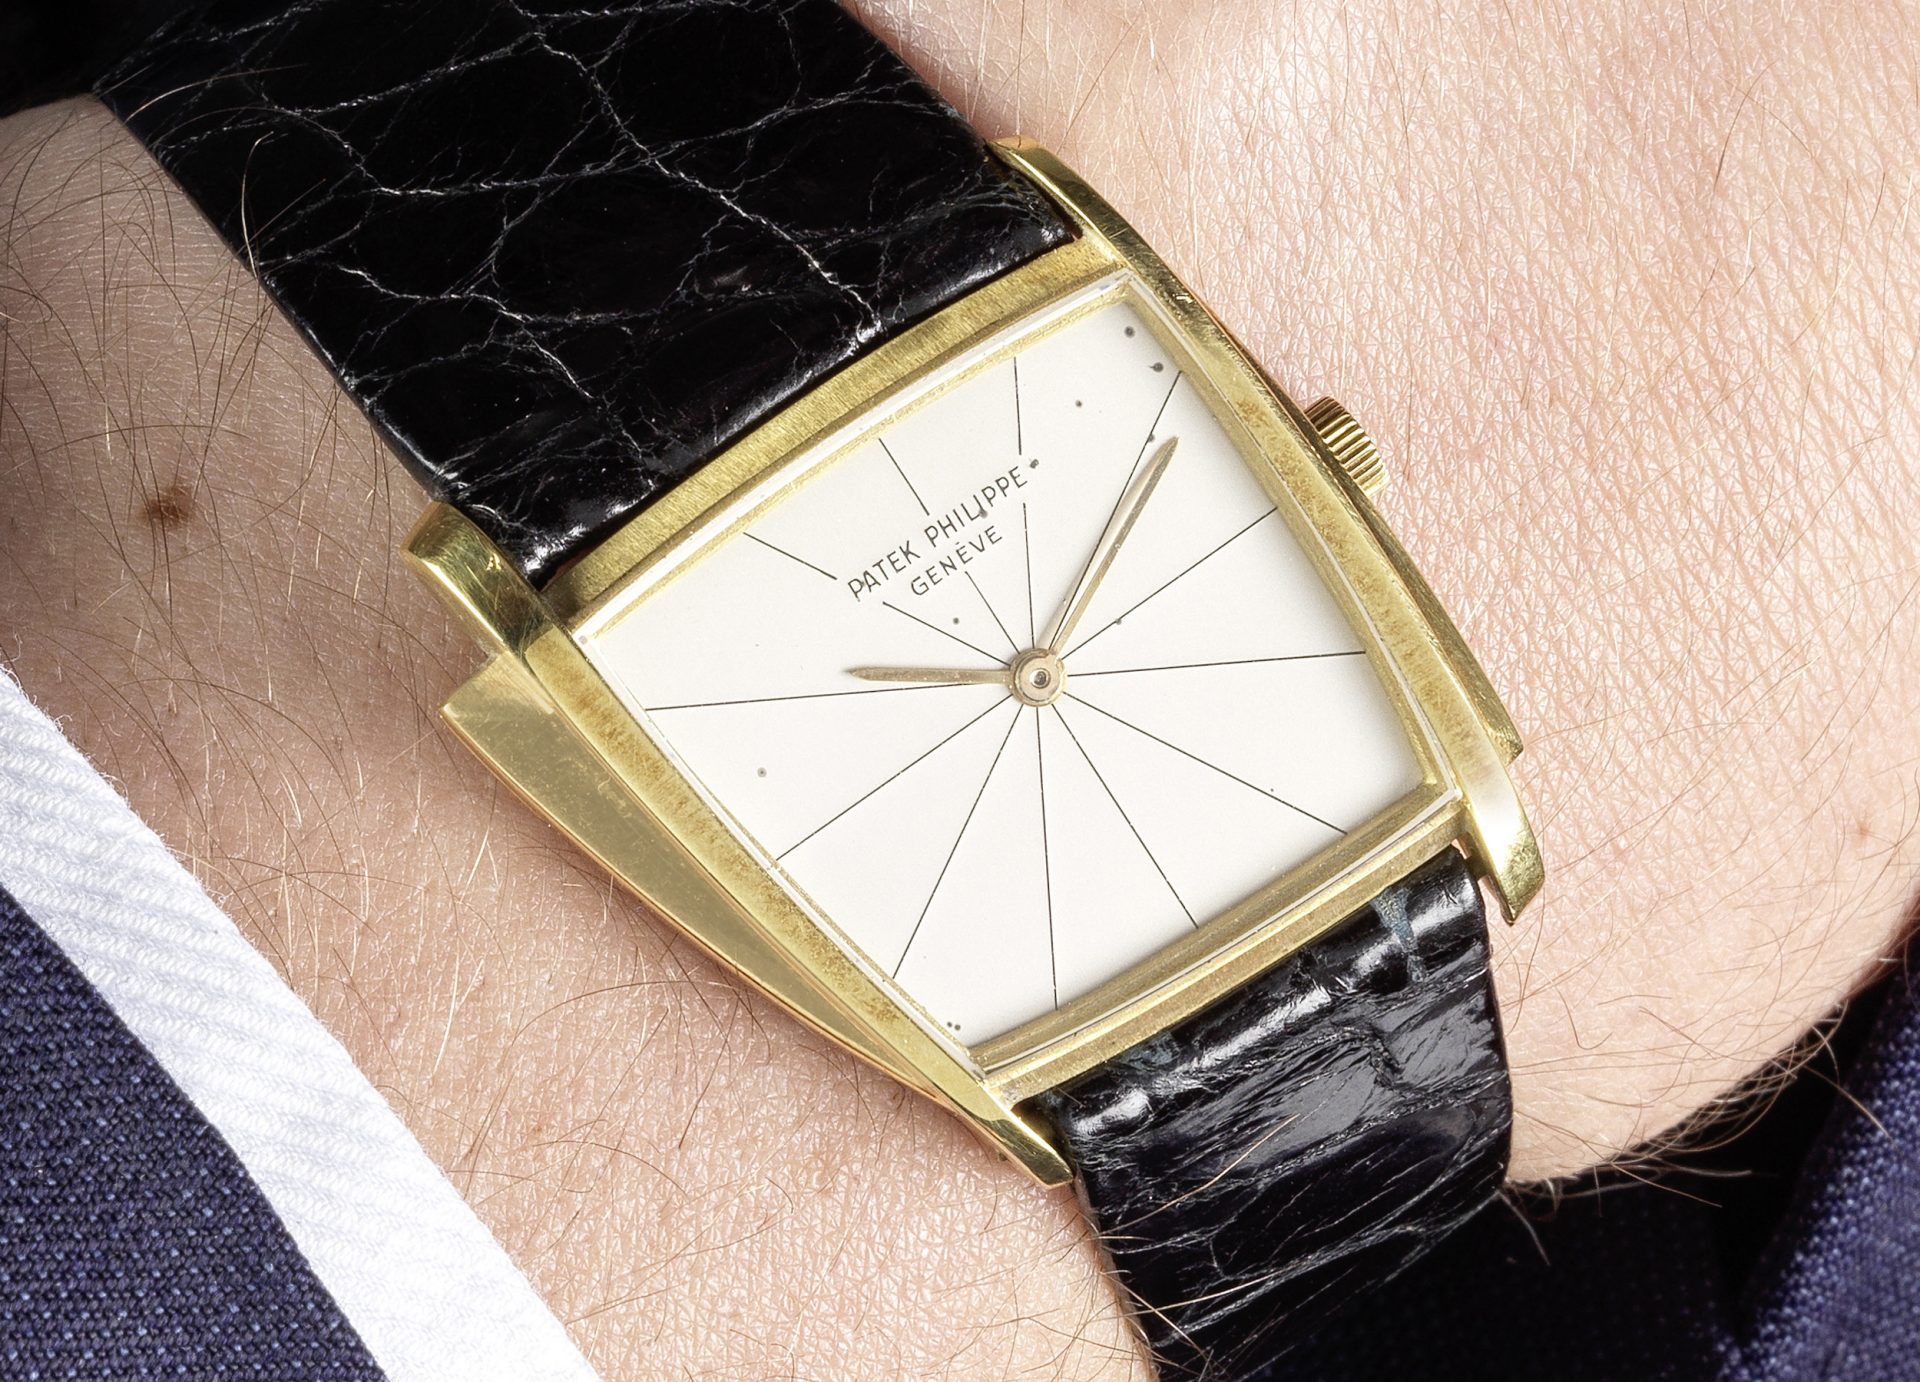 Patek philippe. An unusual fine and exceptionally rare 18k gold manual wind asymmetrical wristwatch gilbert albert ref 3422 circa 1960